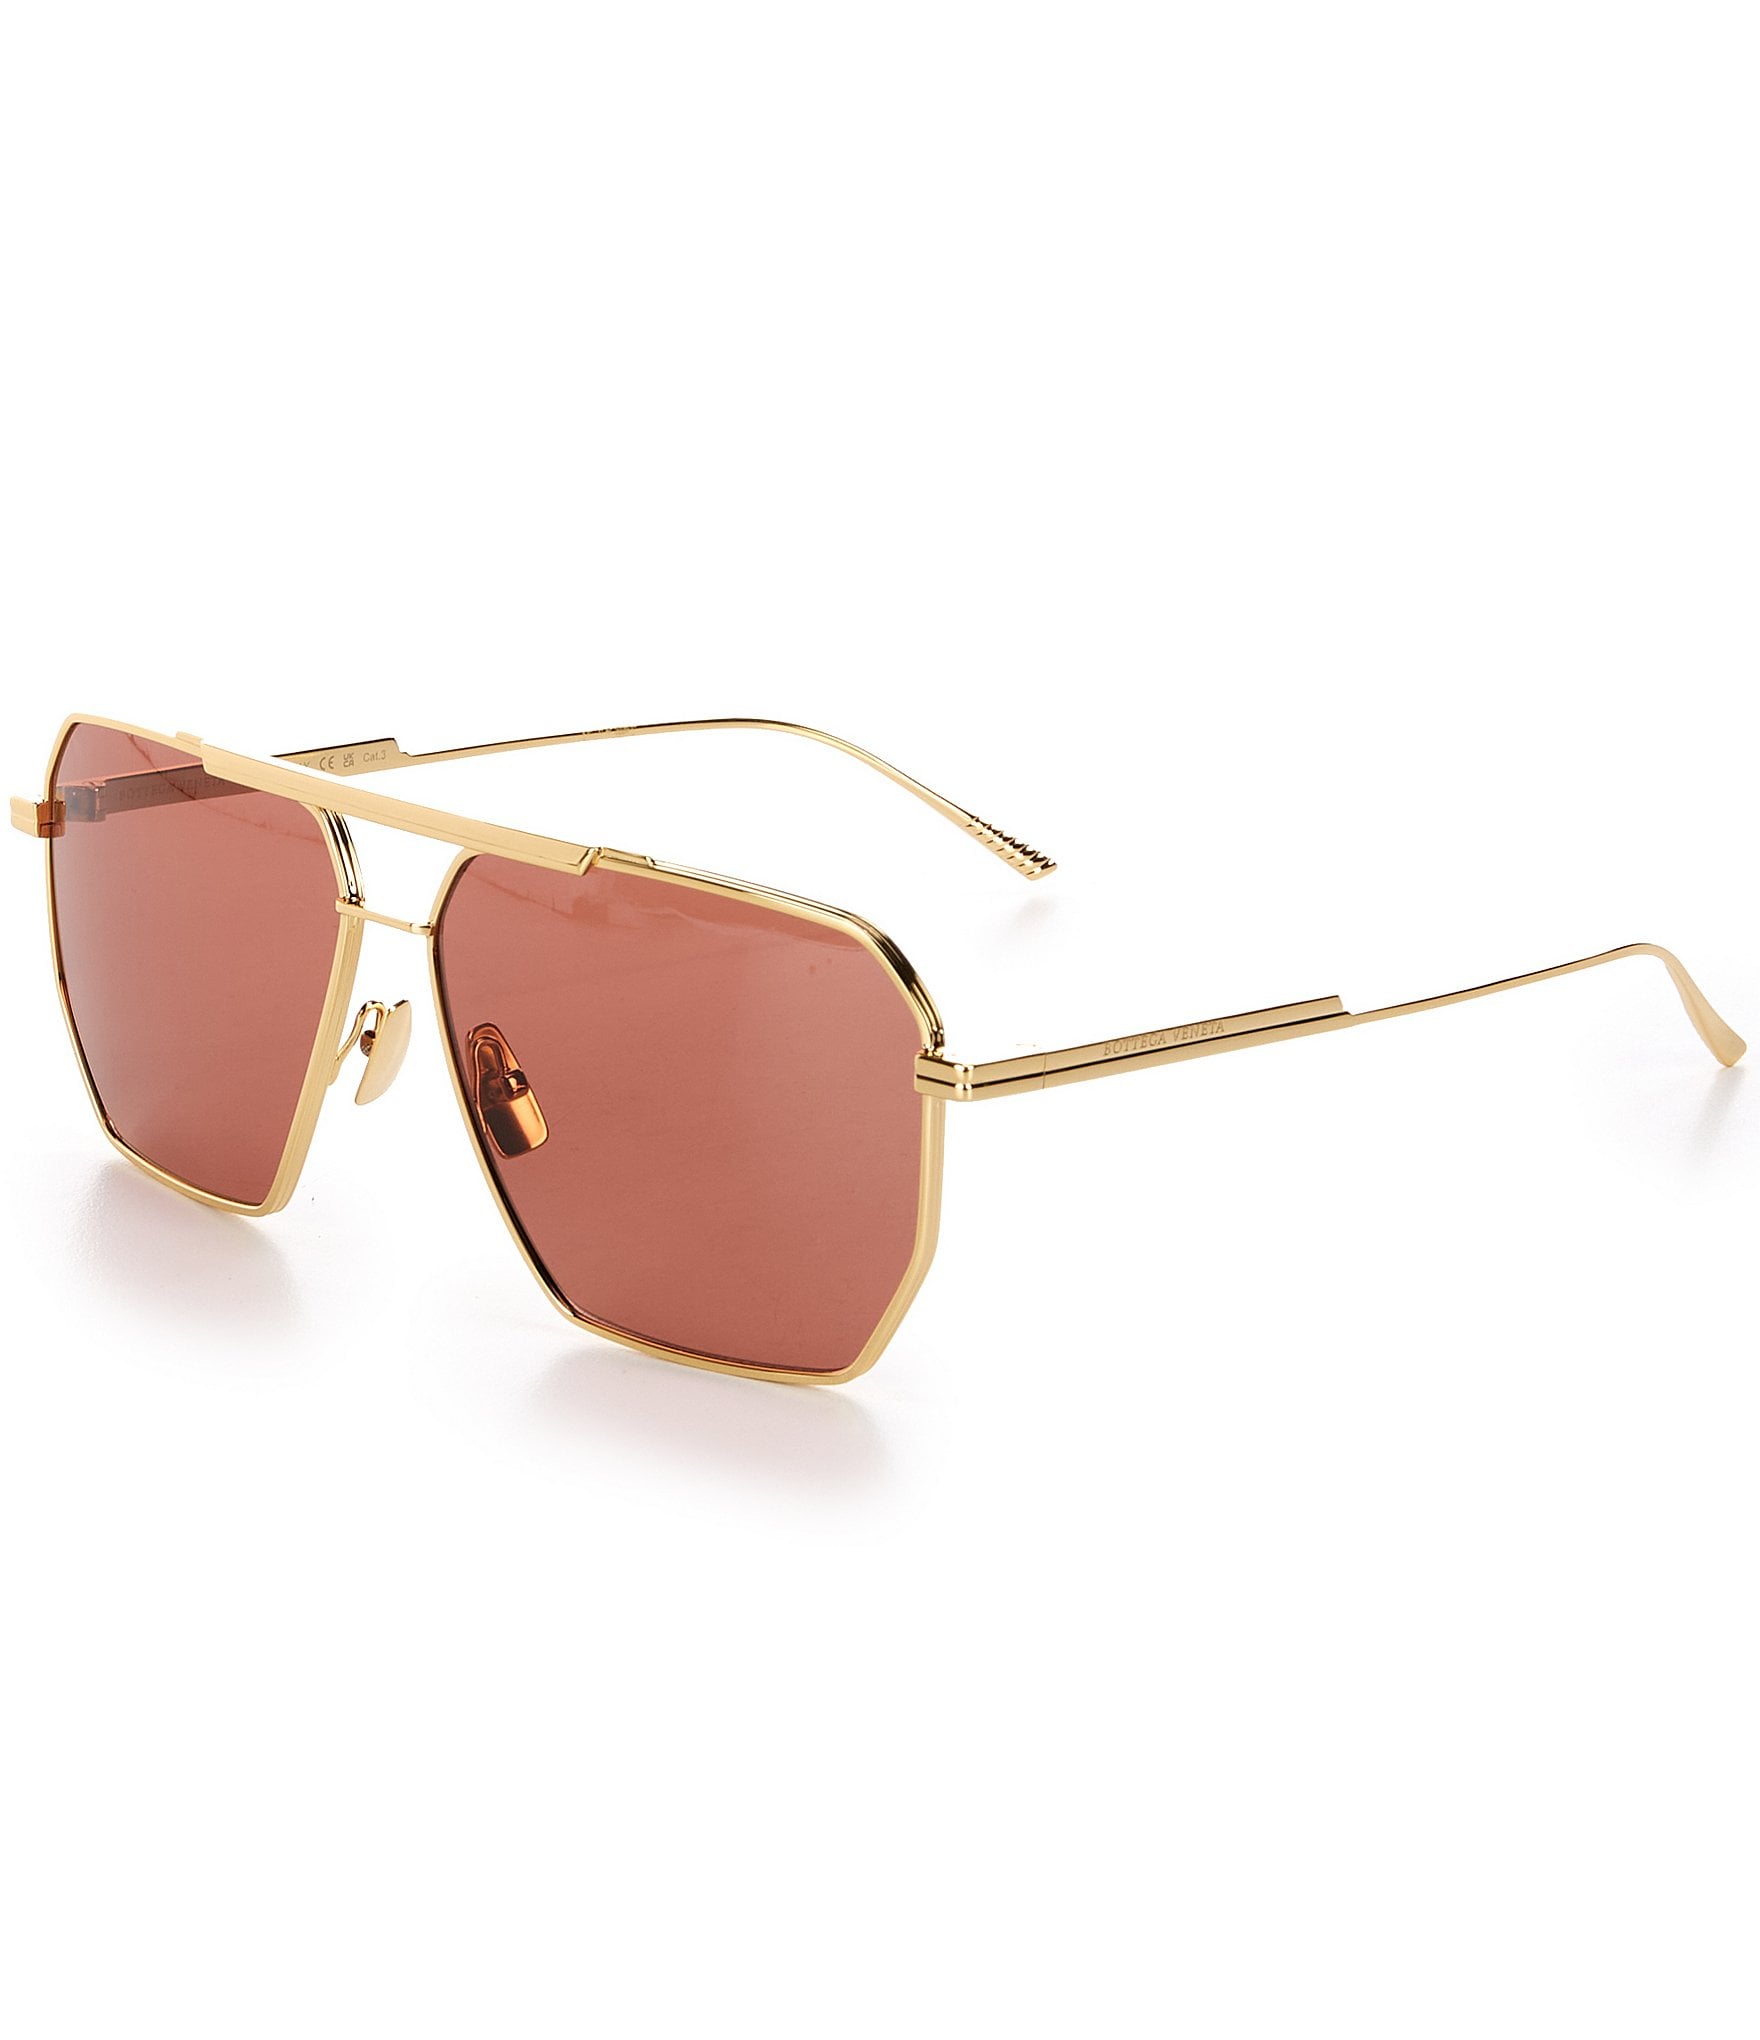 Bottega Veneta Men's Classic Aviator Sunglasses